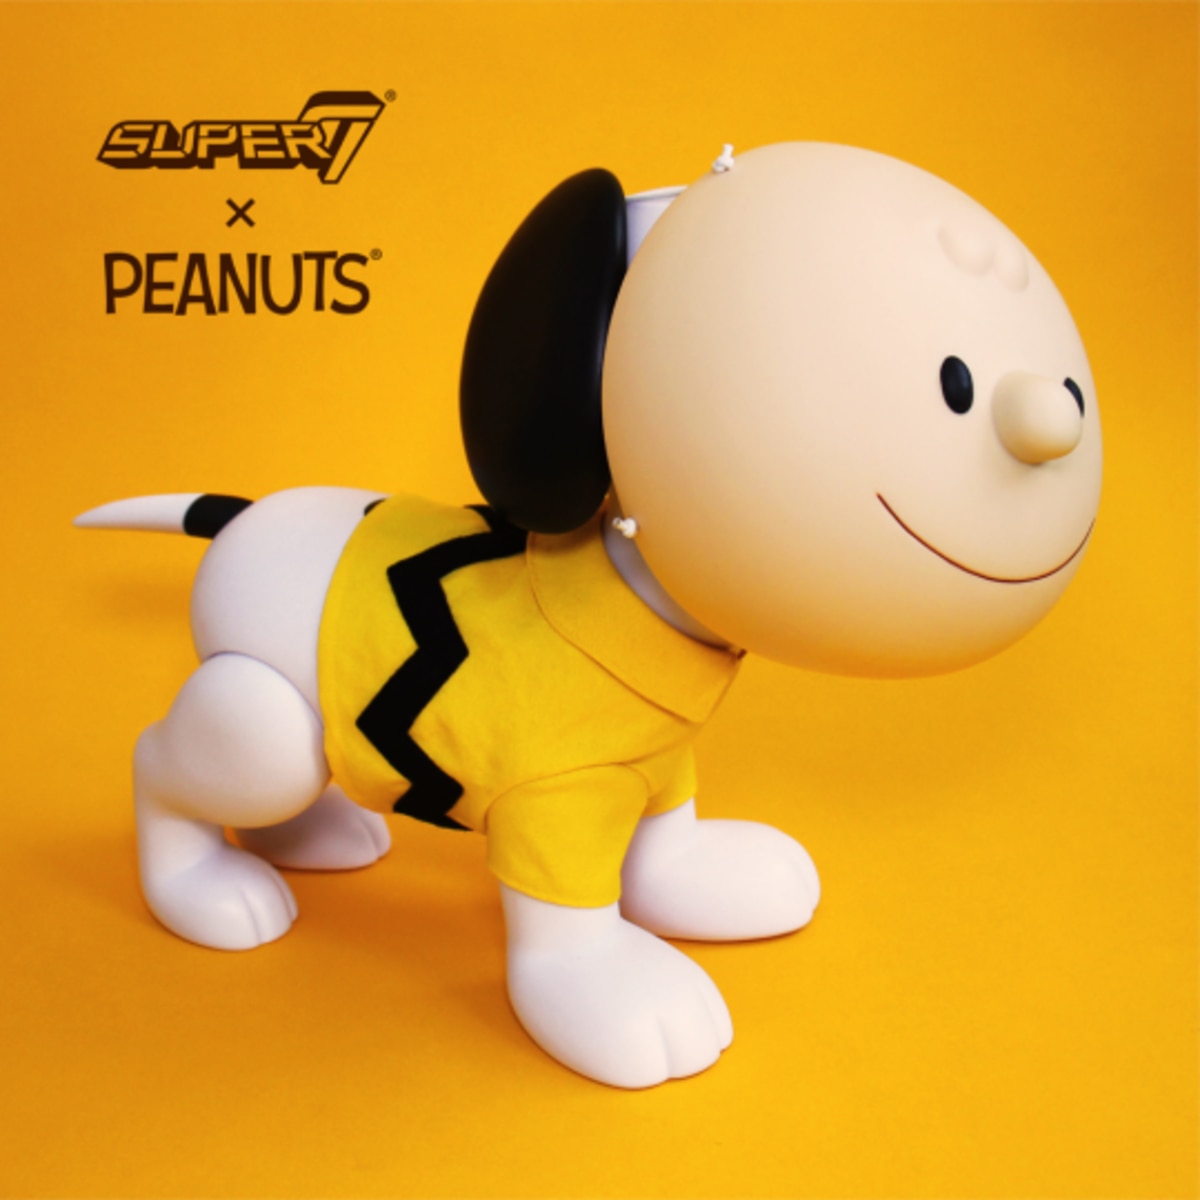 SDCC 2019 Good Ole Charlie Brown Peanuts Reaction Super7 Figure Presale 